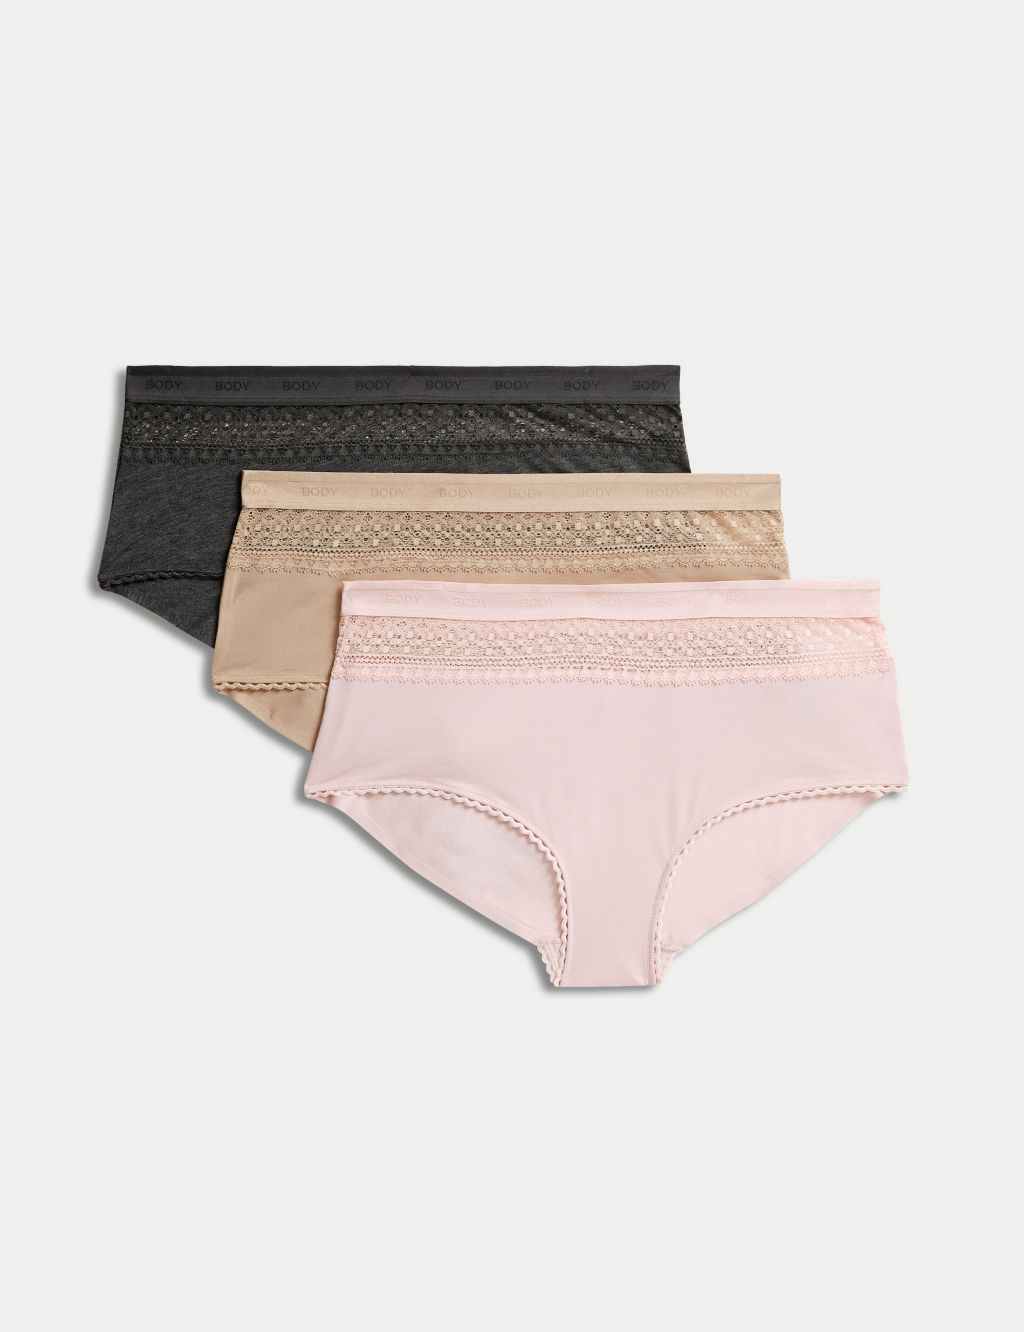 XWSM 2Pcs 100% Cotton Women's Underwear Soft Briefs Breathable Comfort Panties  Underpants for Middle Elderly Ladies Seniors (Color : Pink, Size : L/Large)  : : Clothing, Shoes & Accessories